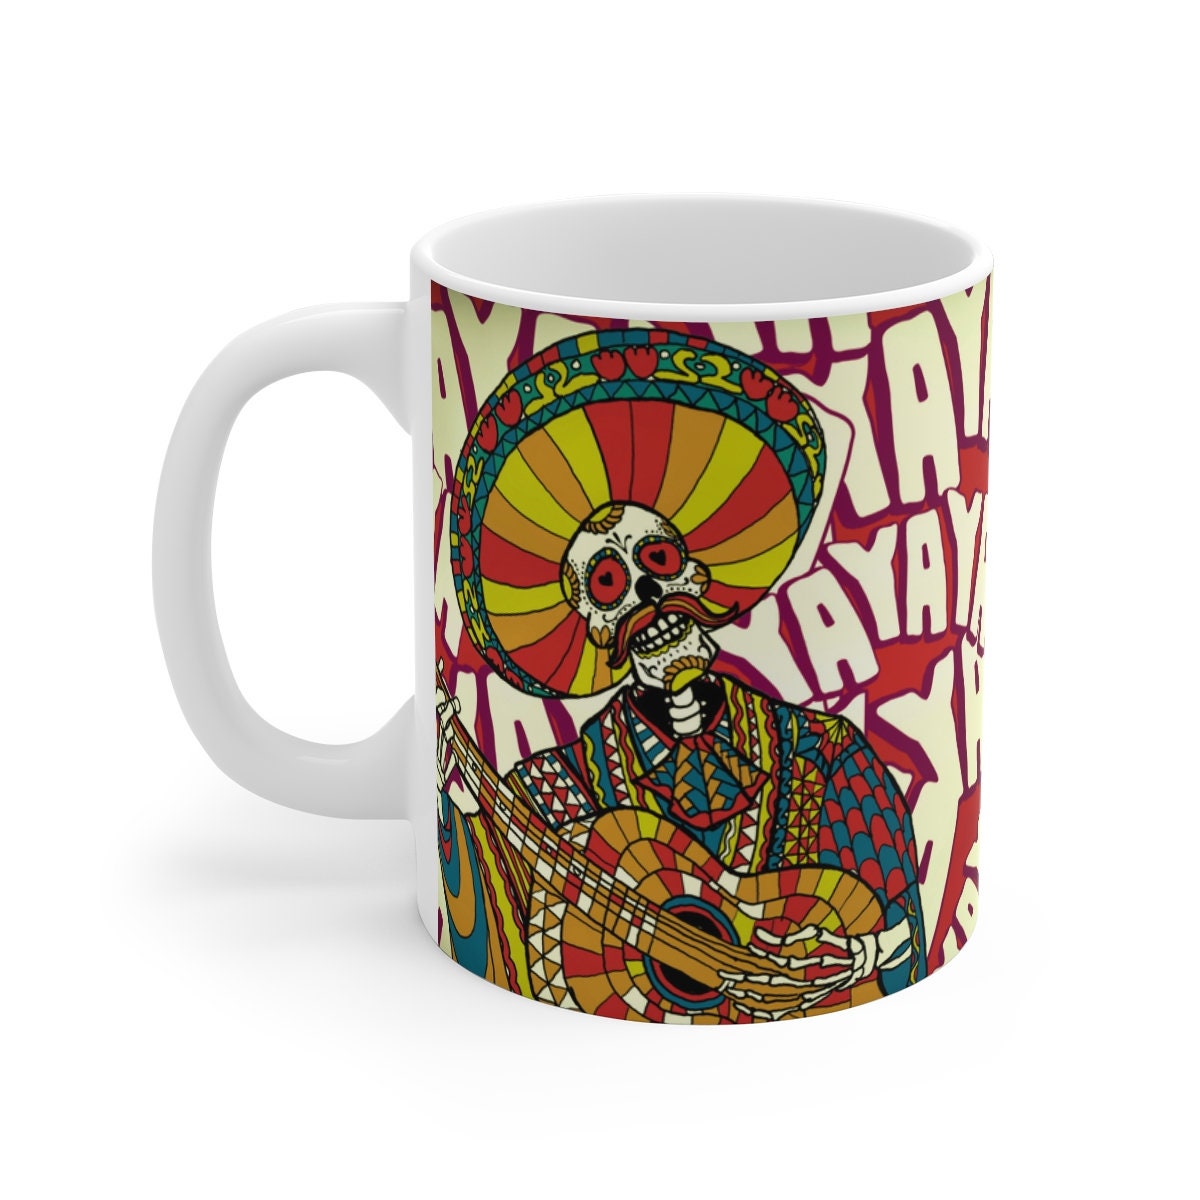 Sugar Skull Mug, Mariachi Skull Mug Gift, Mexican Skull Ceramic Coffee Mug, Day Of Dead Gothic Skull Mug, Colorful Skull Art Print Mug Gift